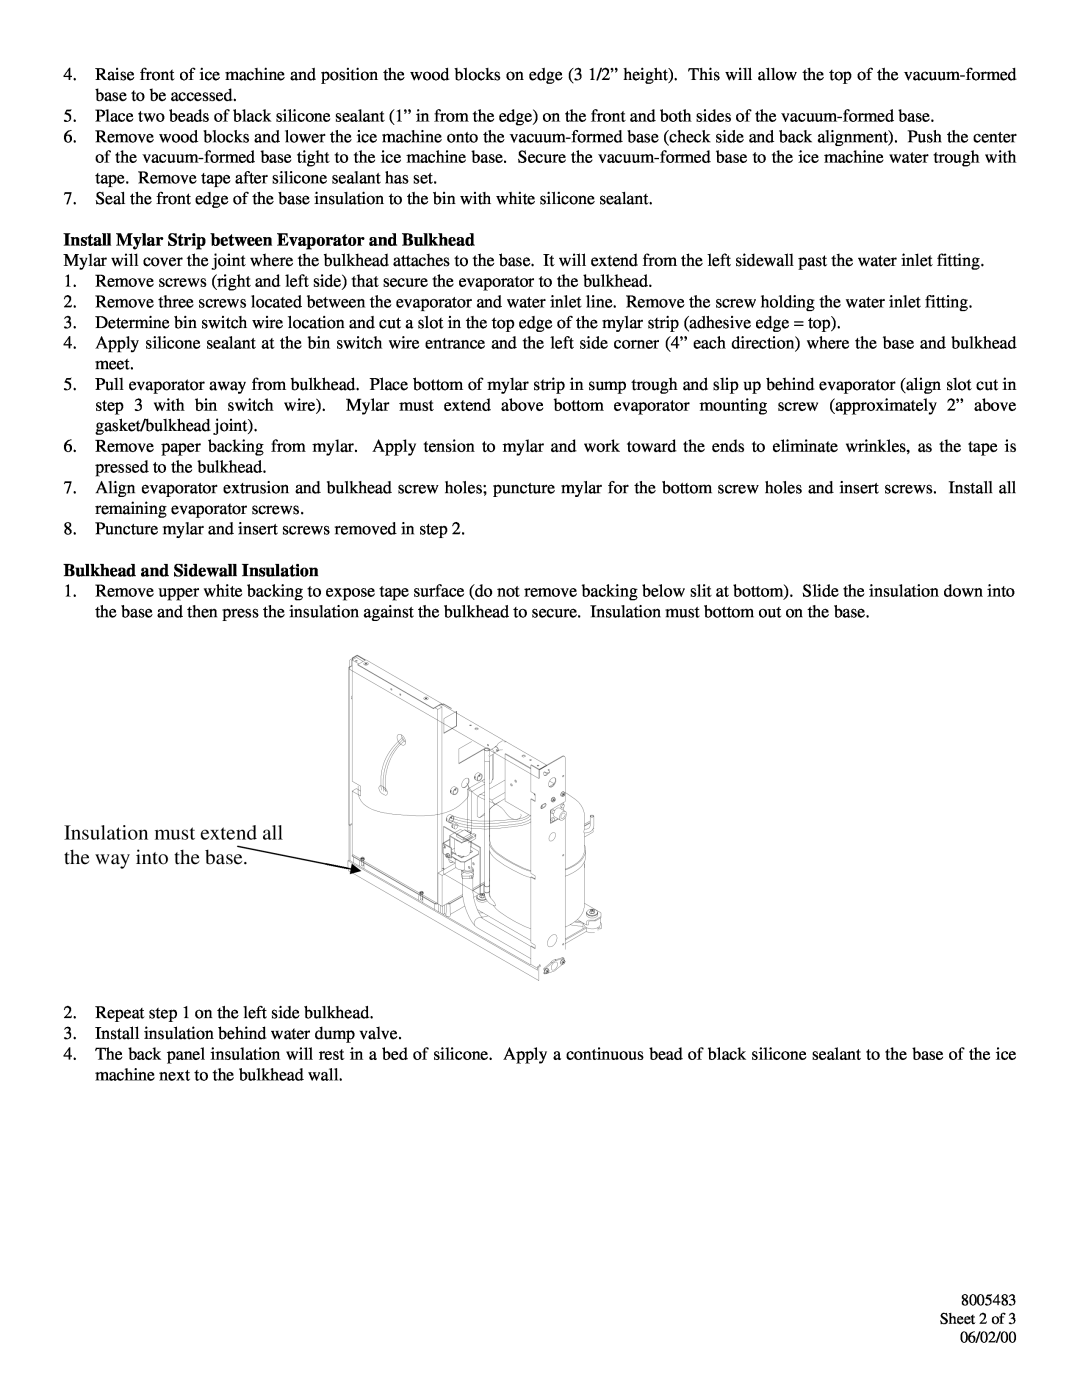 Manitowoc Ice Q-1300 Install Mylar Strip between Evaporator and Bulkhead, Bulkhead and Sidewall Insulation 